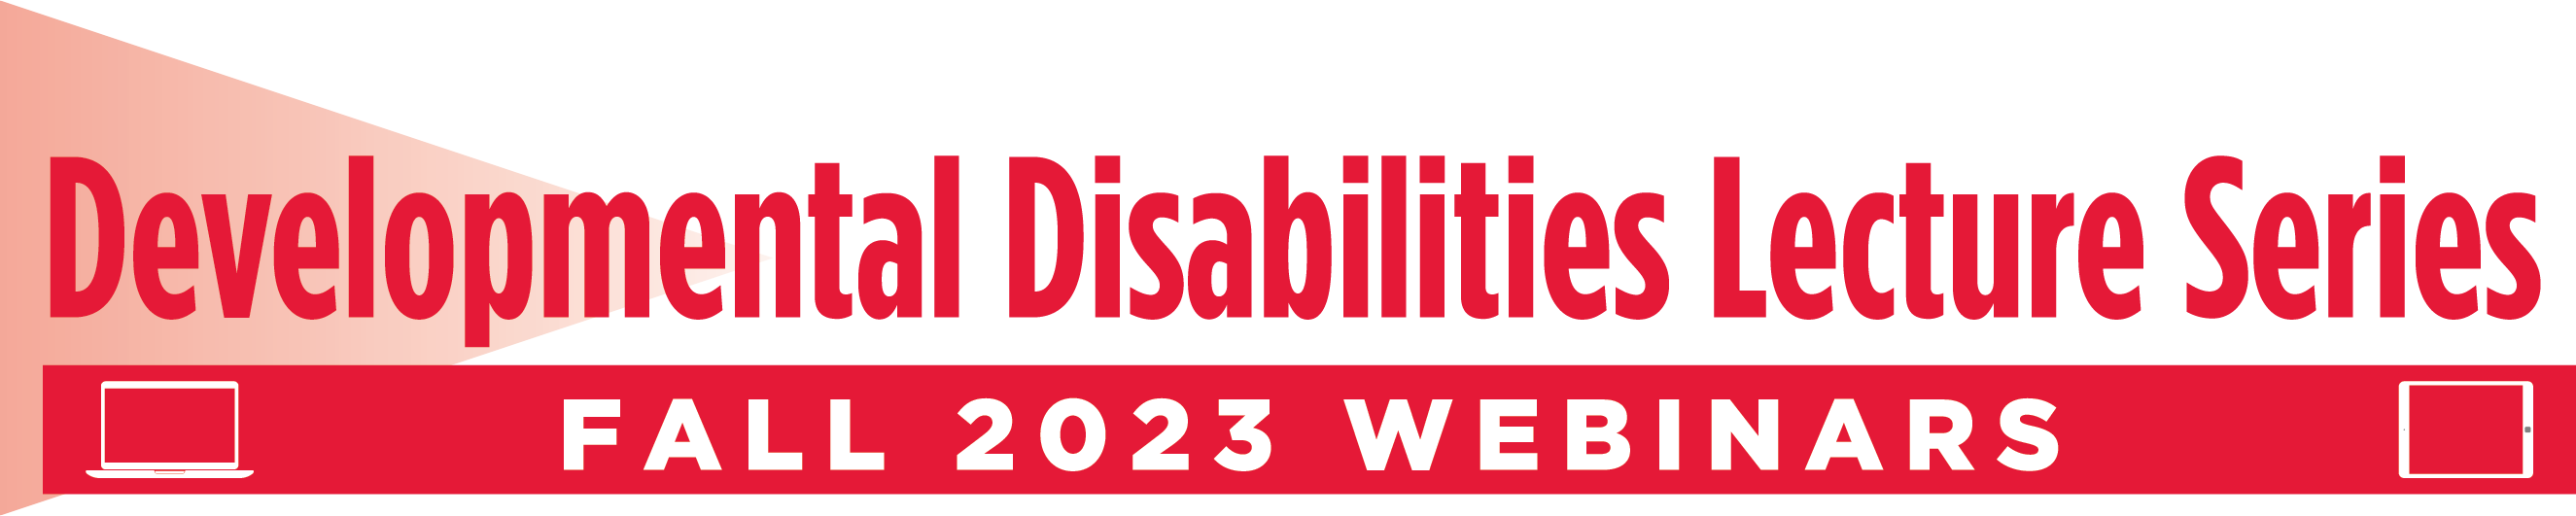 Developmental Disabilities Lecture Series Fall 2023 Webinars